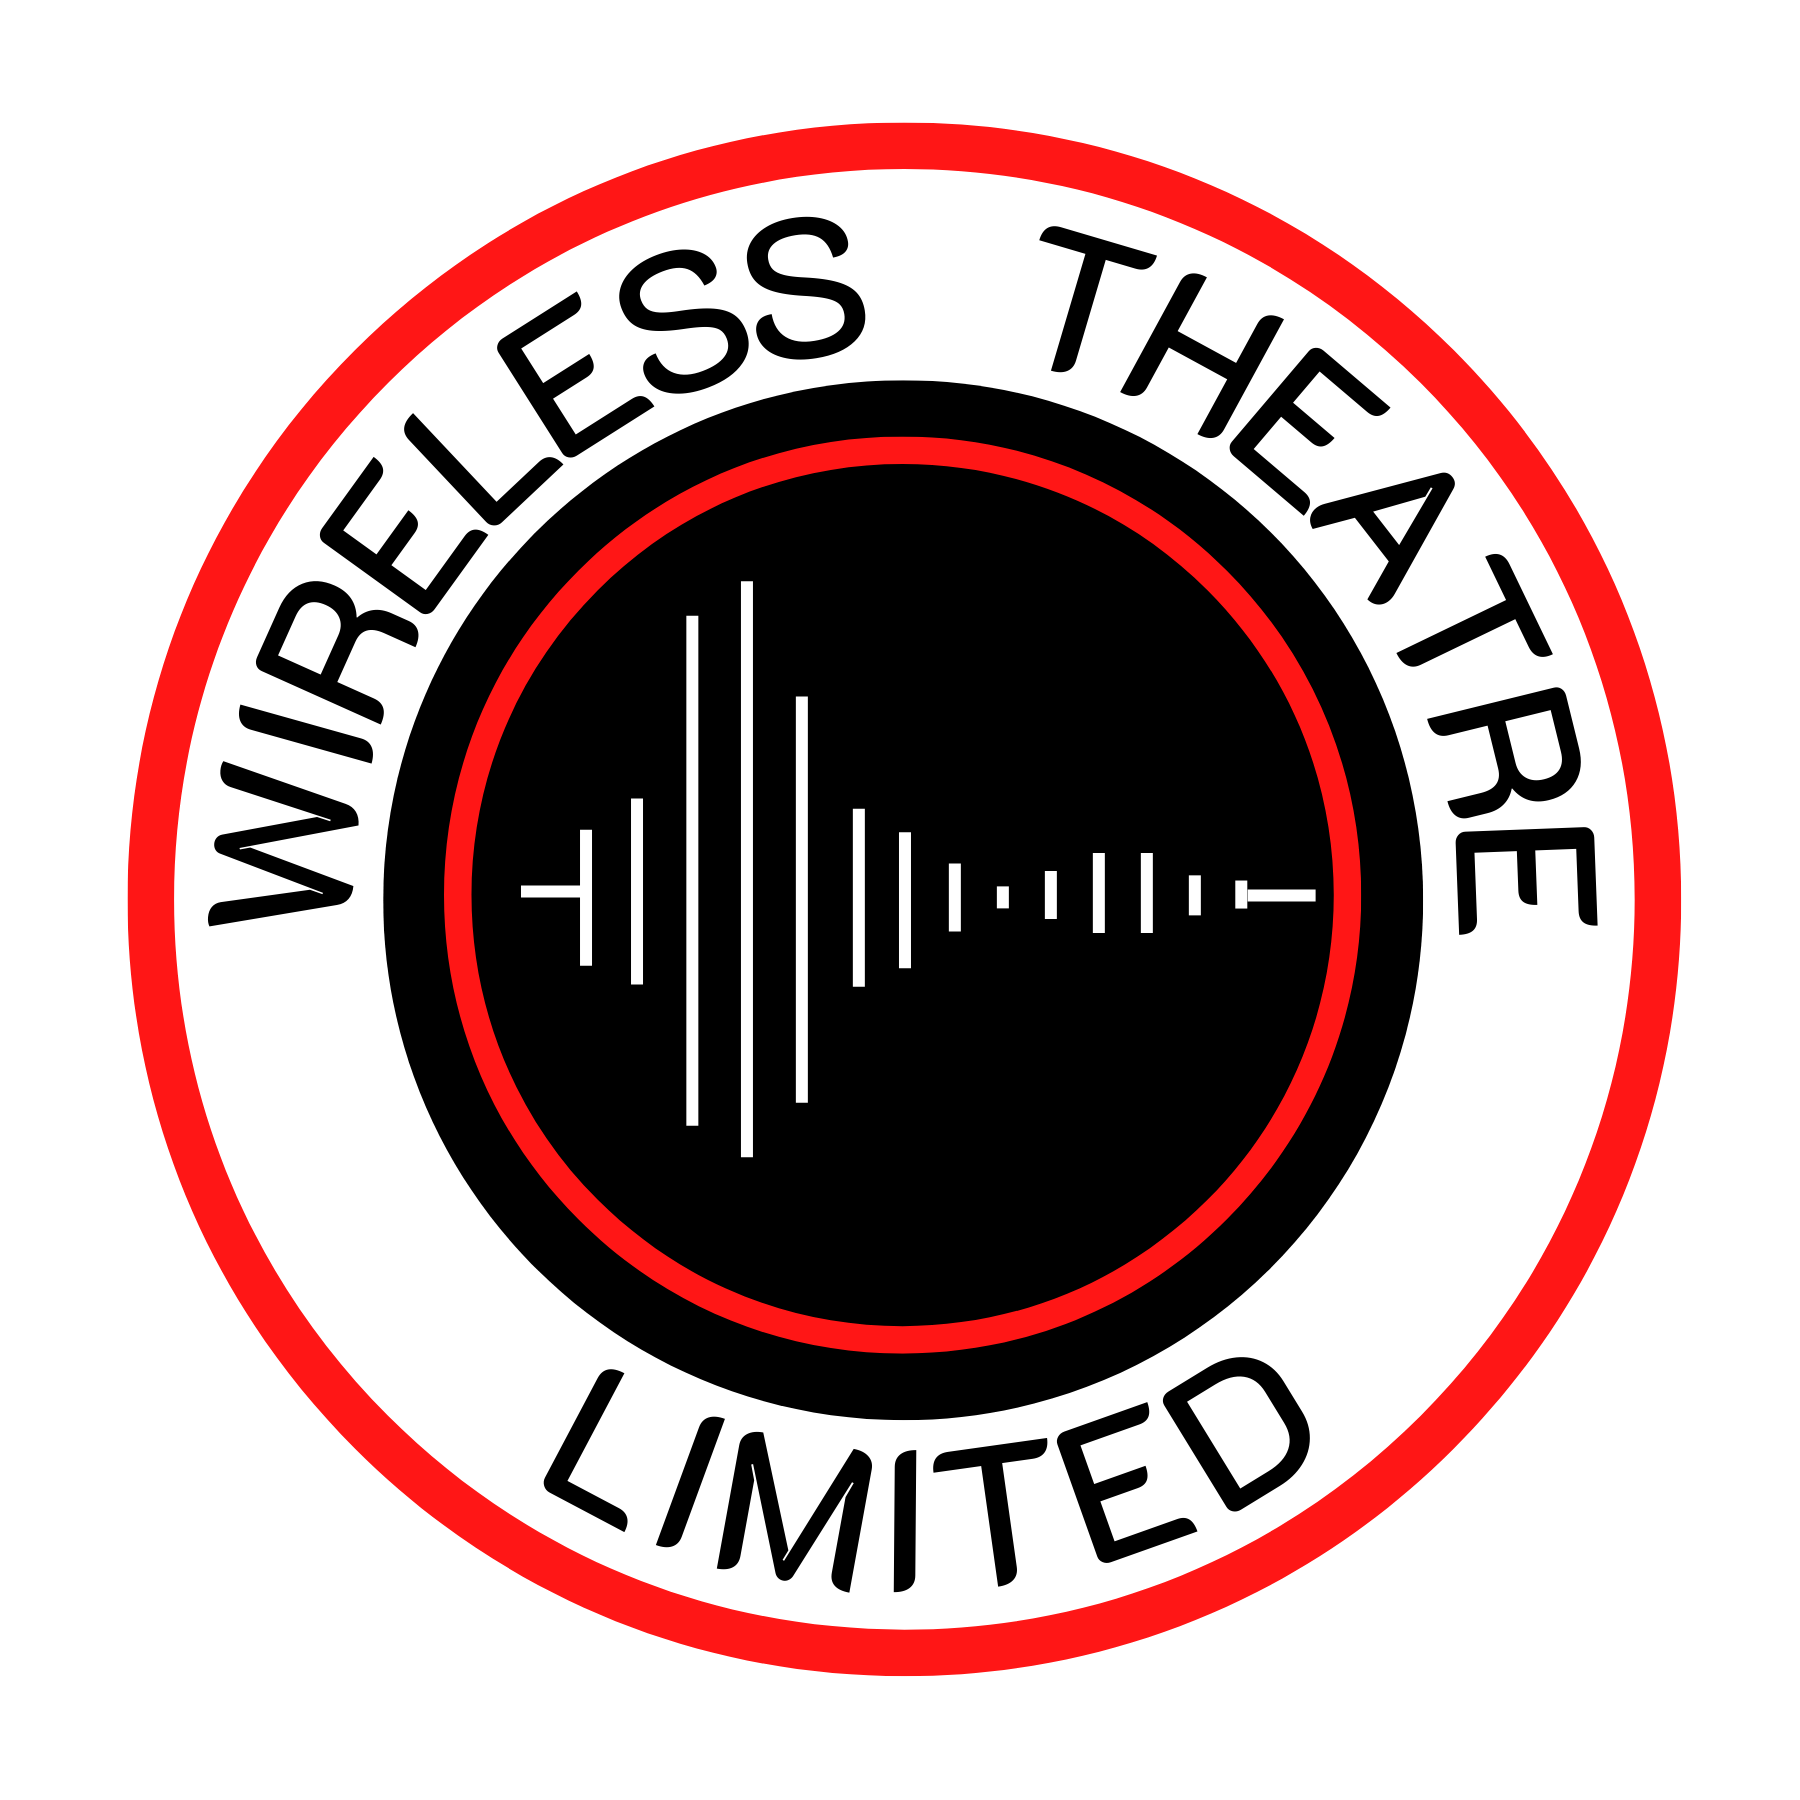 Wireless Theatre Ltd Audio Production and award Winning Audio Drama Production